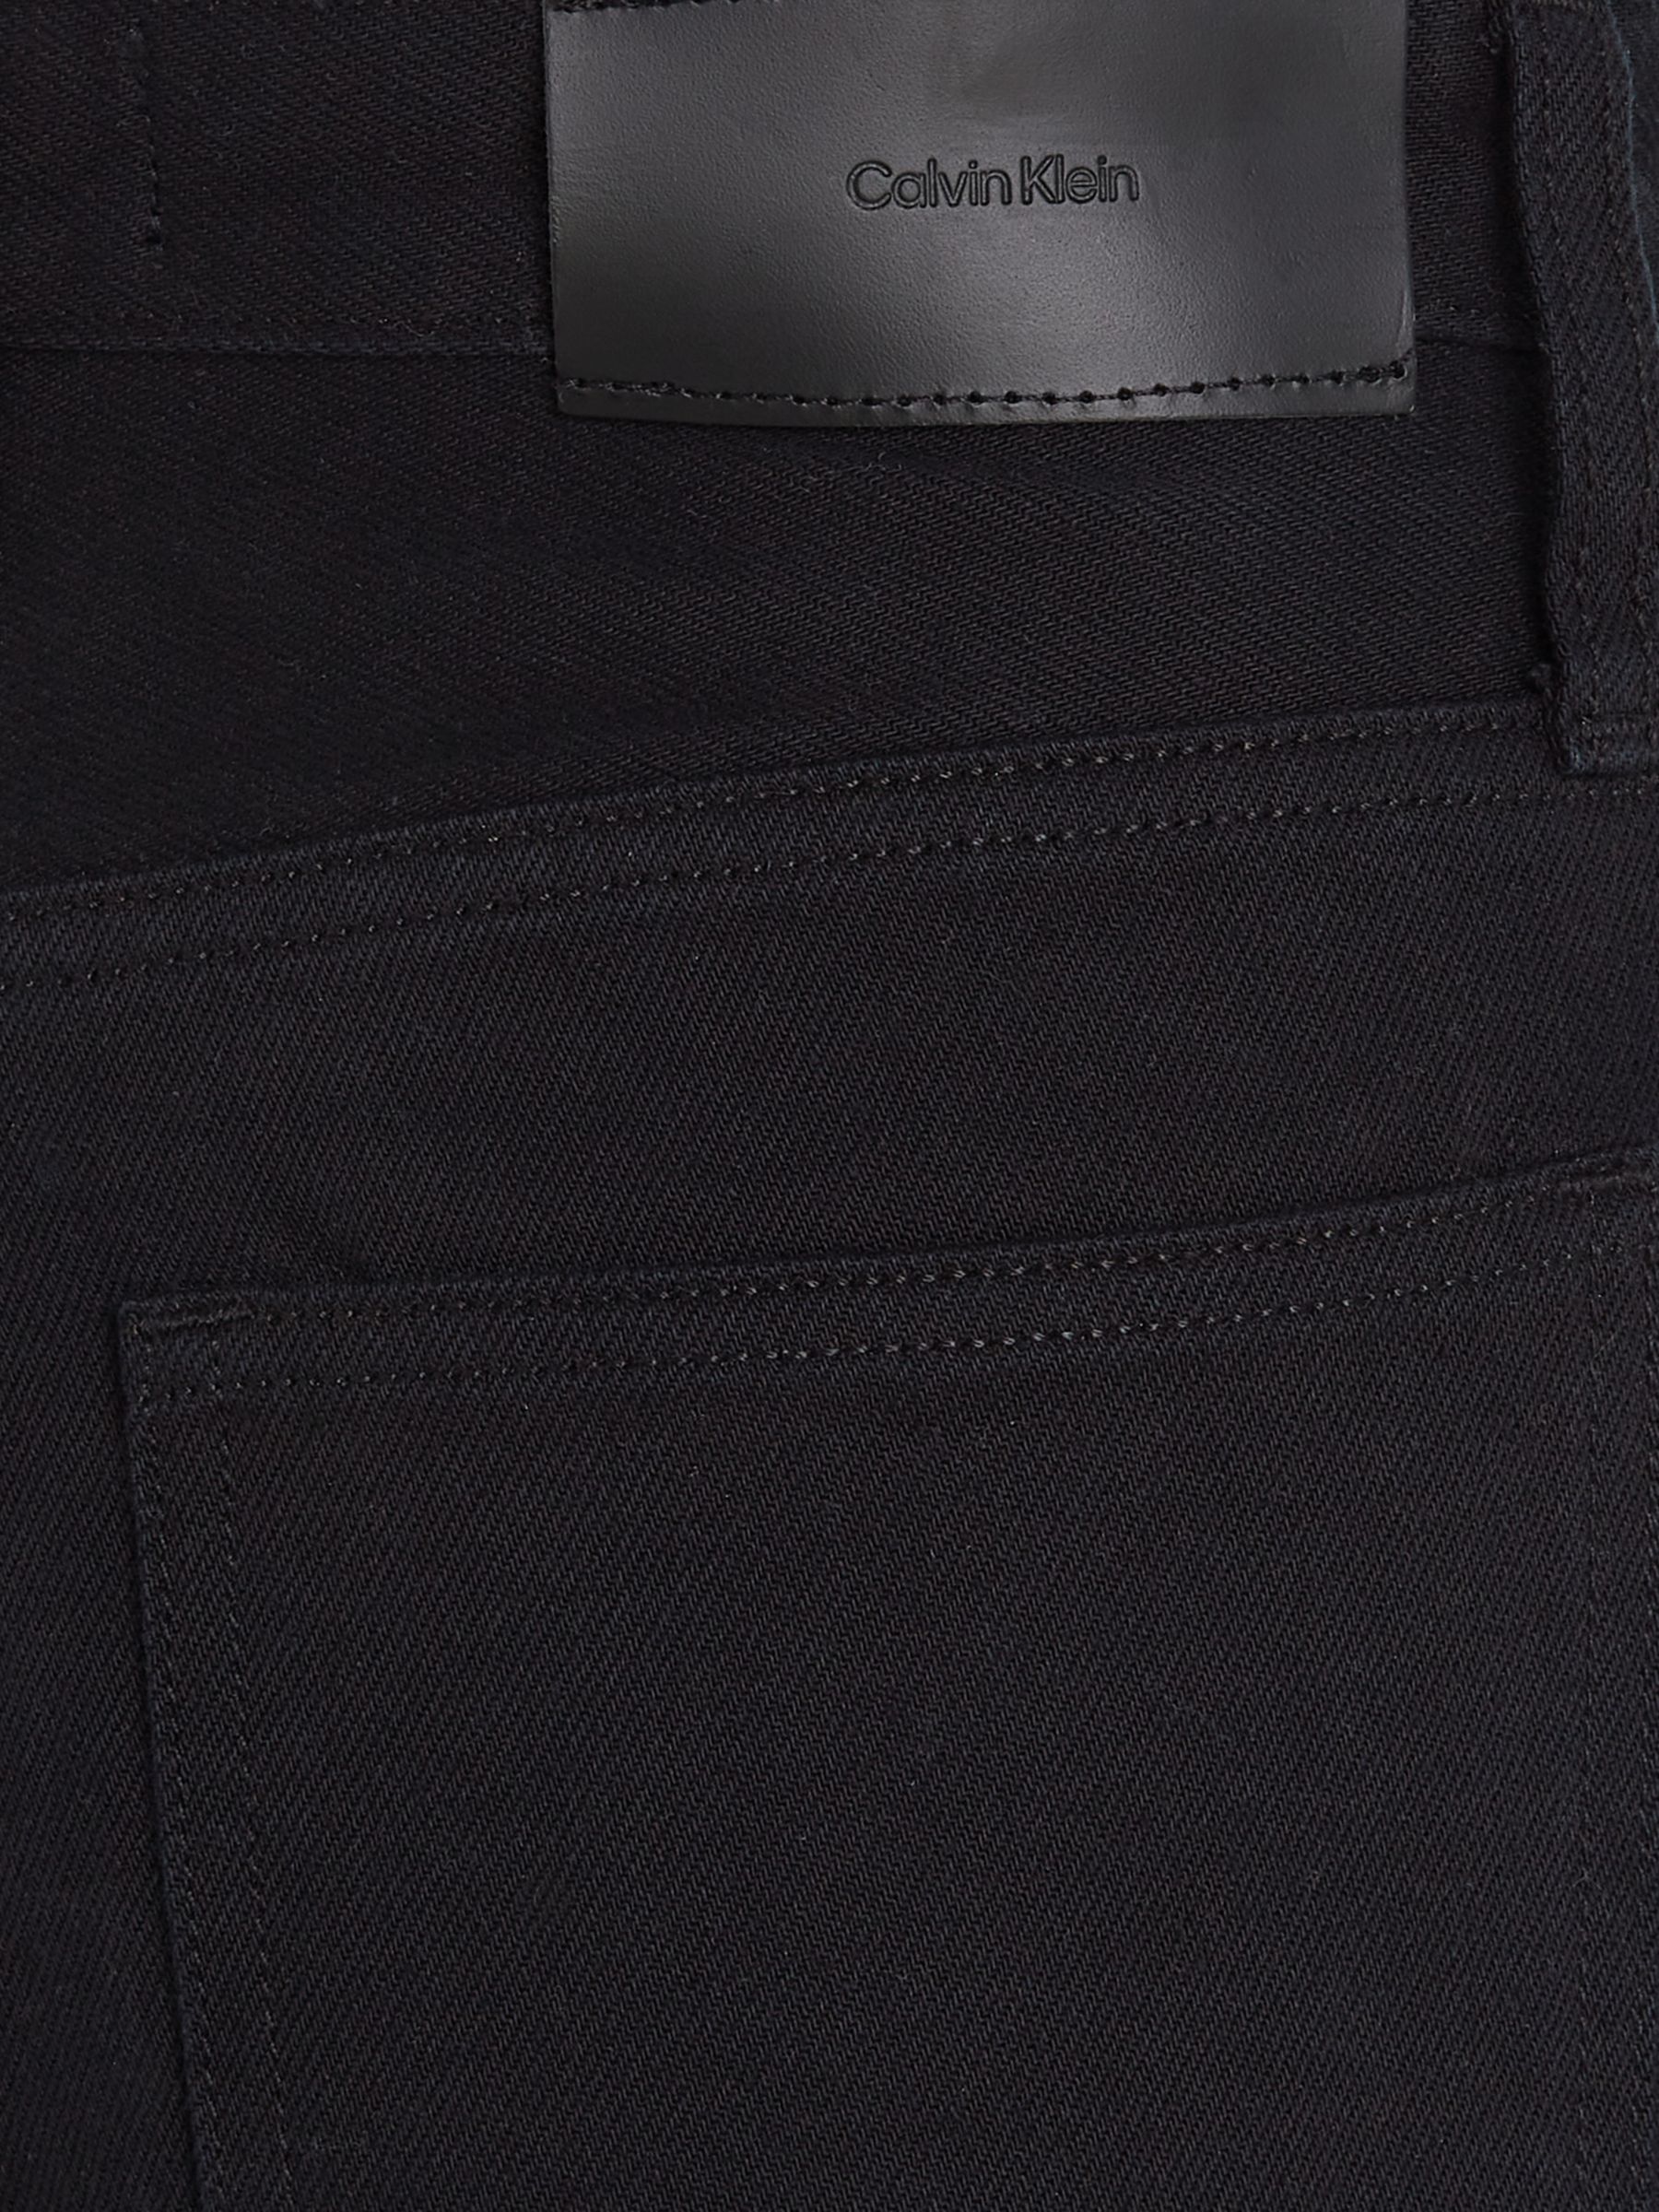 Calvin Klein Infinite Wide Leg Jeans, Denim Black, 25R